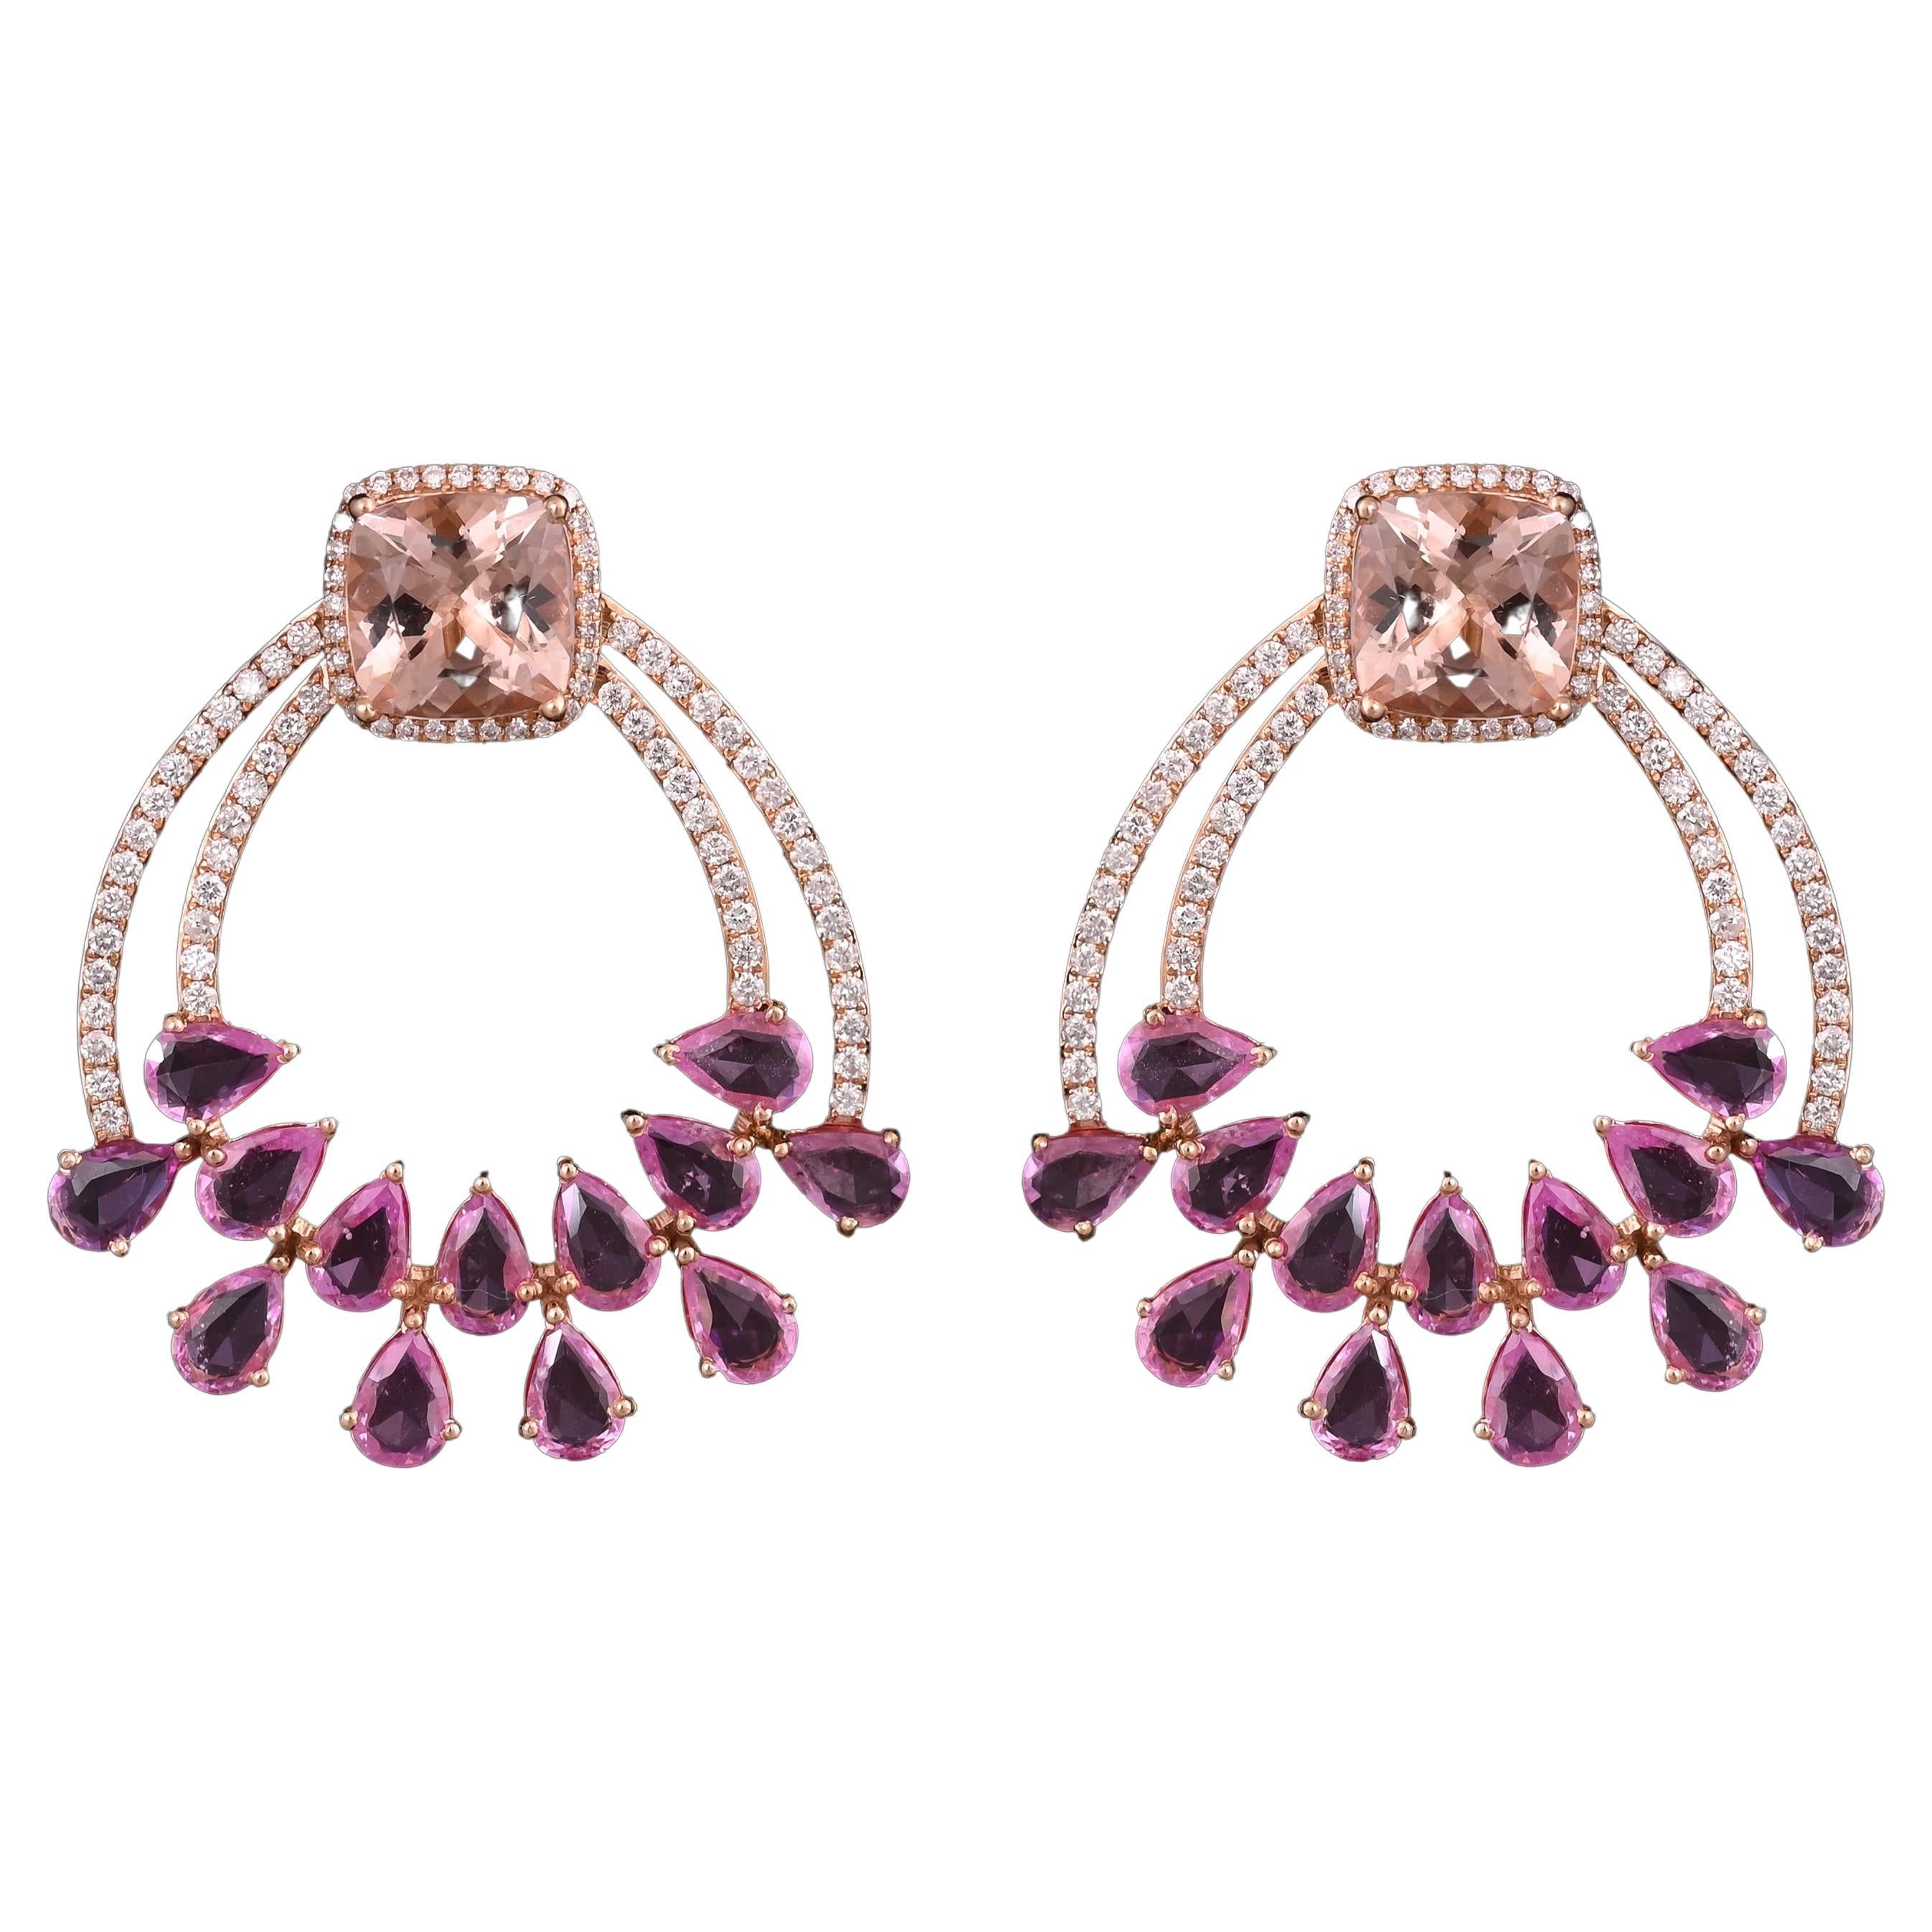 5.59 Carats Morganite, 7.69 Carats Pink Sapphires & Diamonds Chandelier Earrings